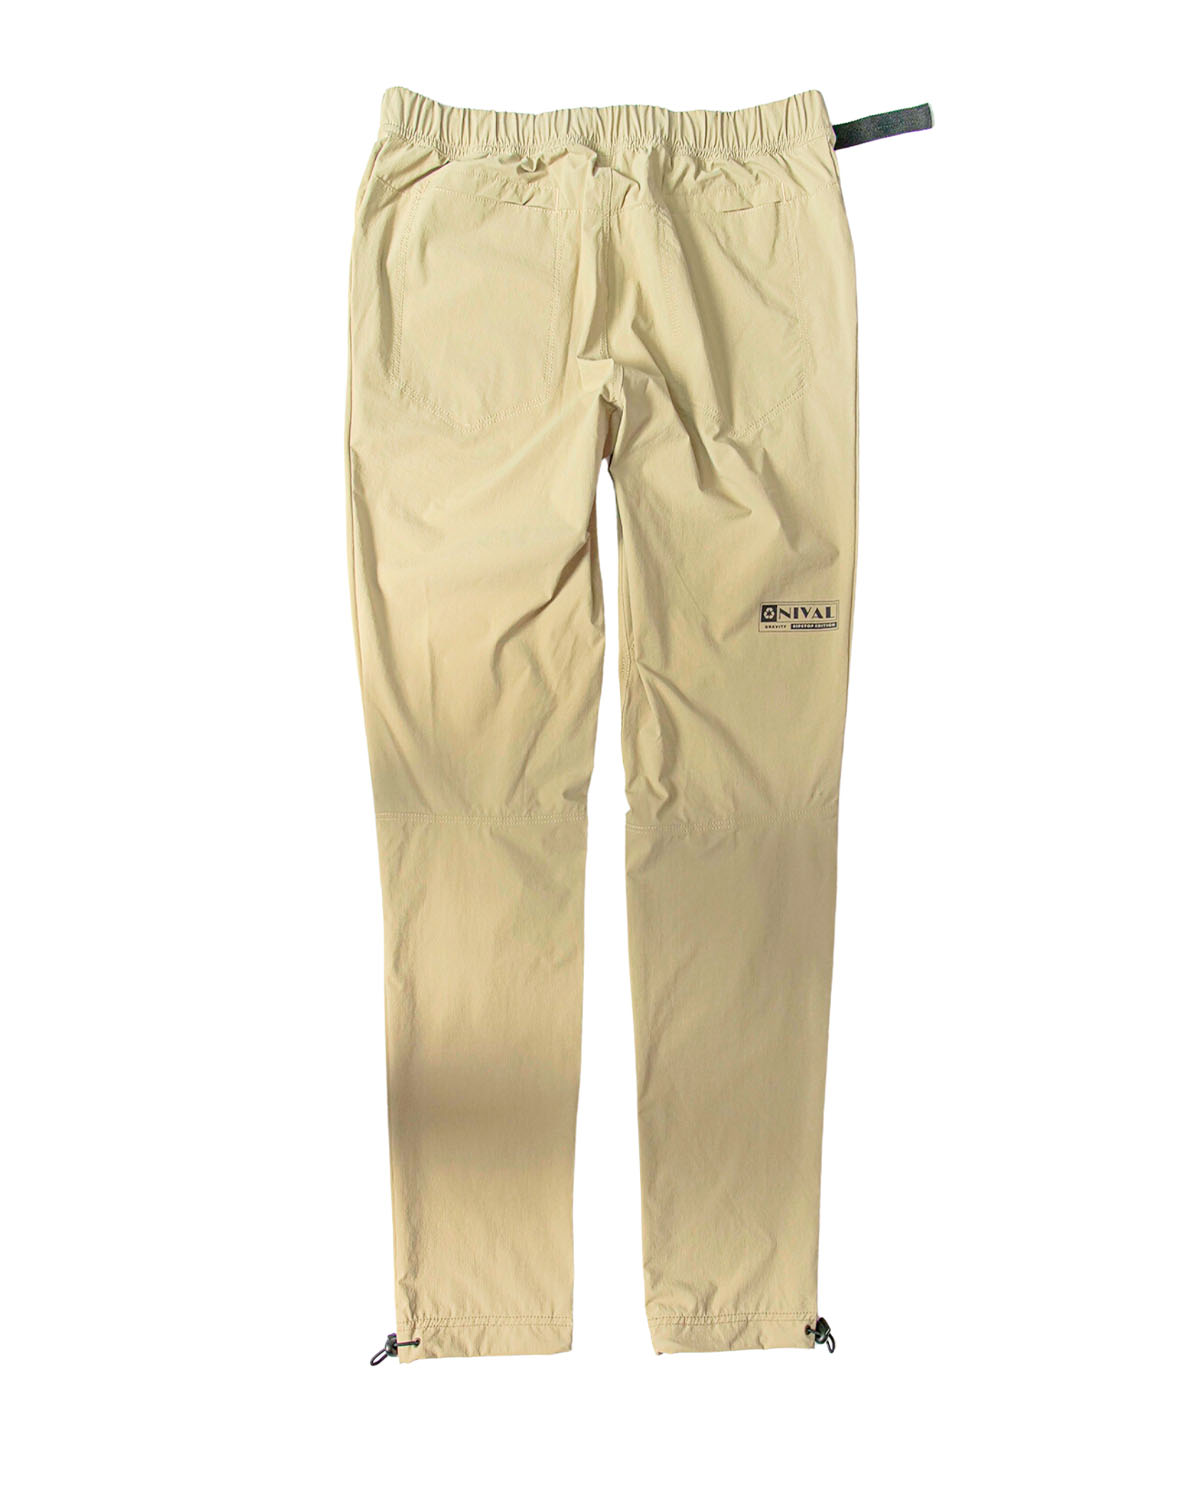 pantalon-escalade-randonnée-nival-gravity-beige 2